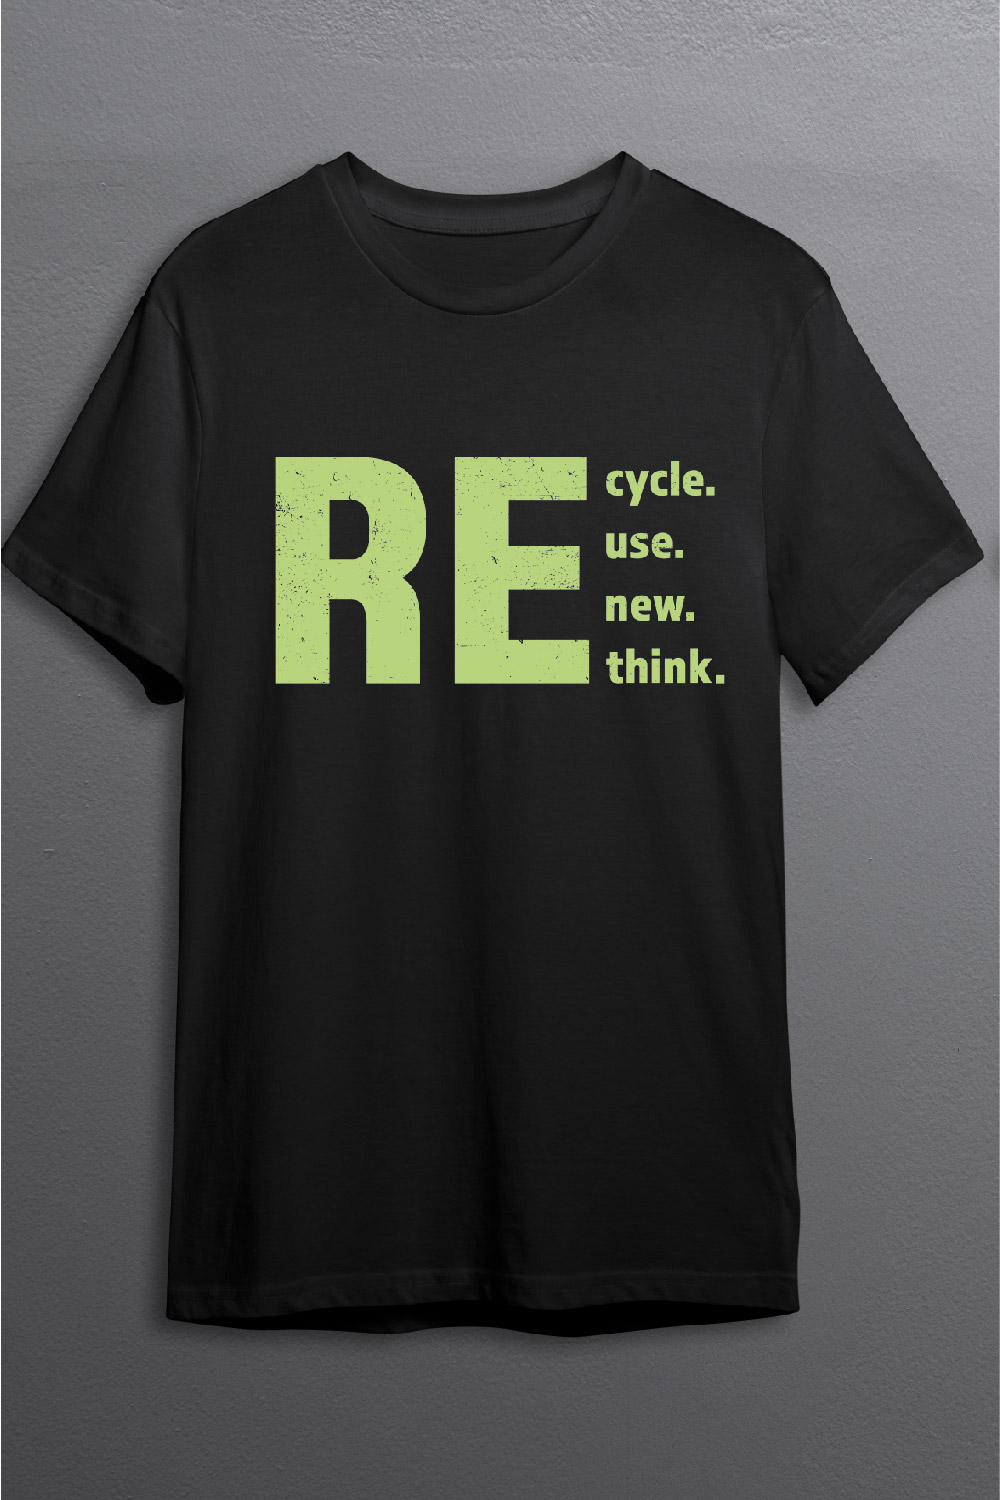 Recycle Reuse Renew Rethink Crisis Environmental Activism, Eco-friendly, Climate crisis pinterest preview image.